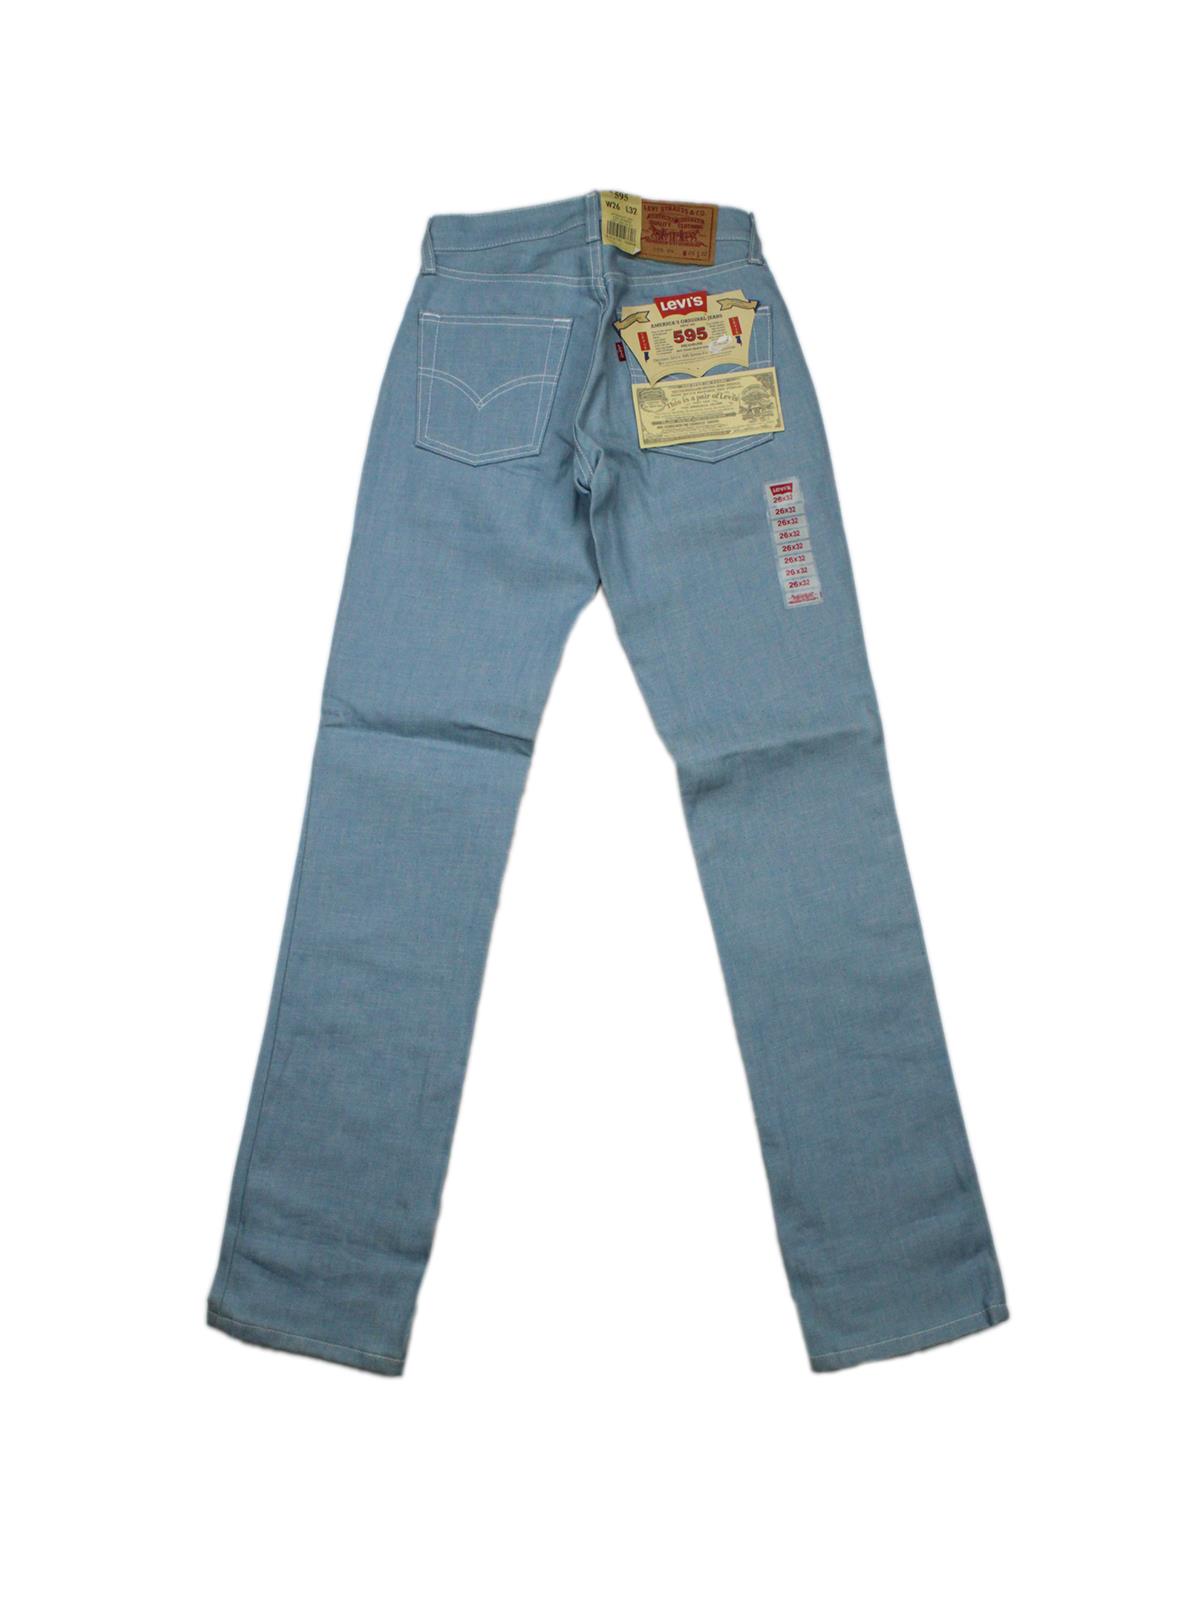 LEVI'S 595 Straight Leg Jeans